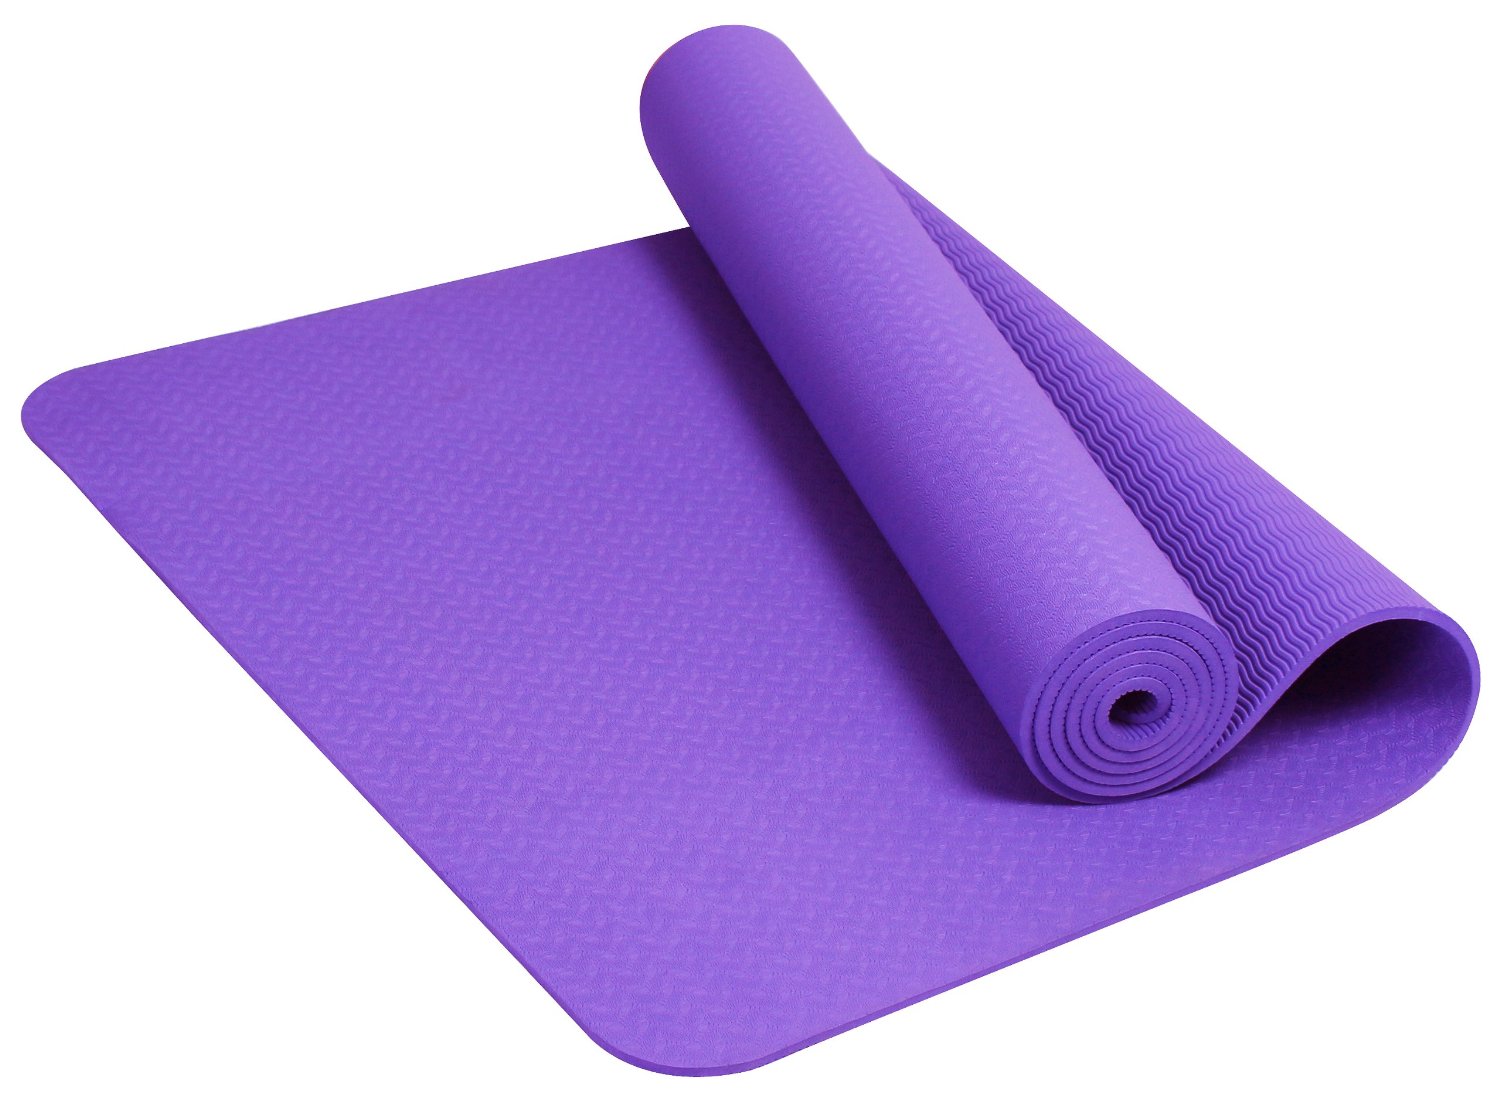 waterproof exercise mat